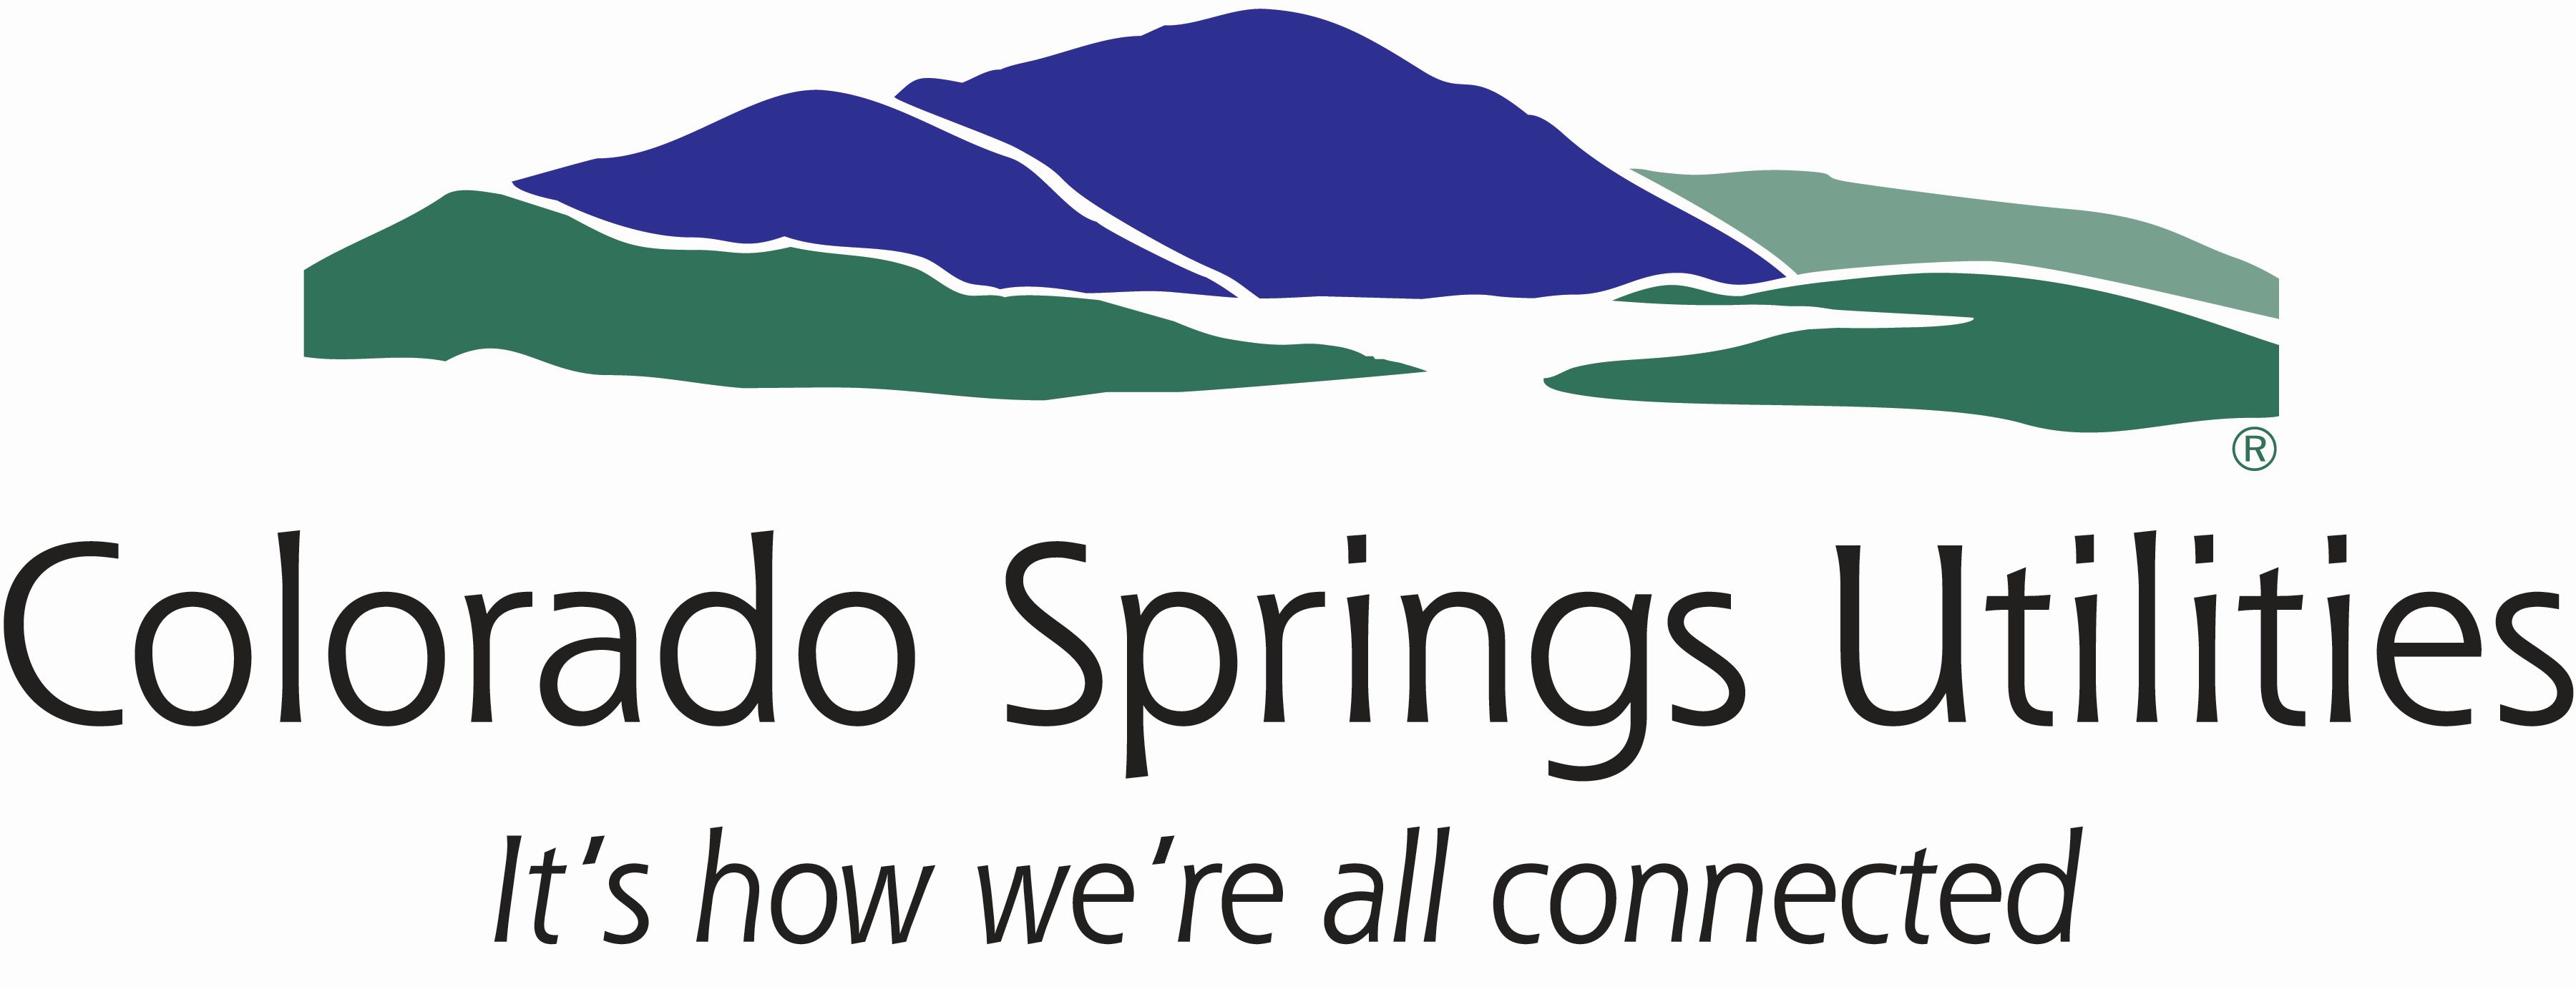 Transportation Company - Colorado Springs Department of Utilities - Energy